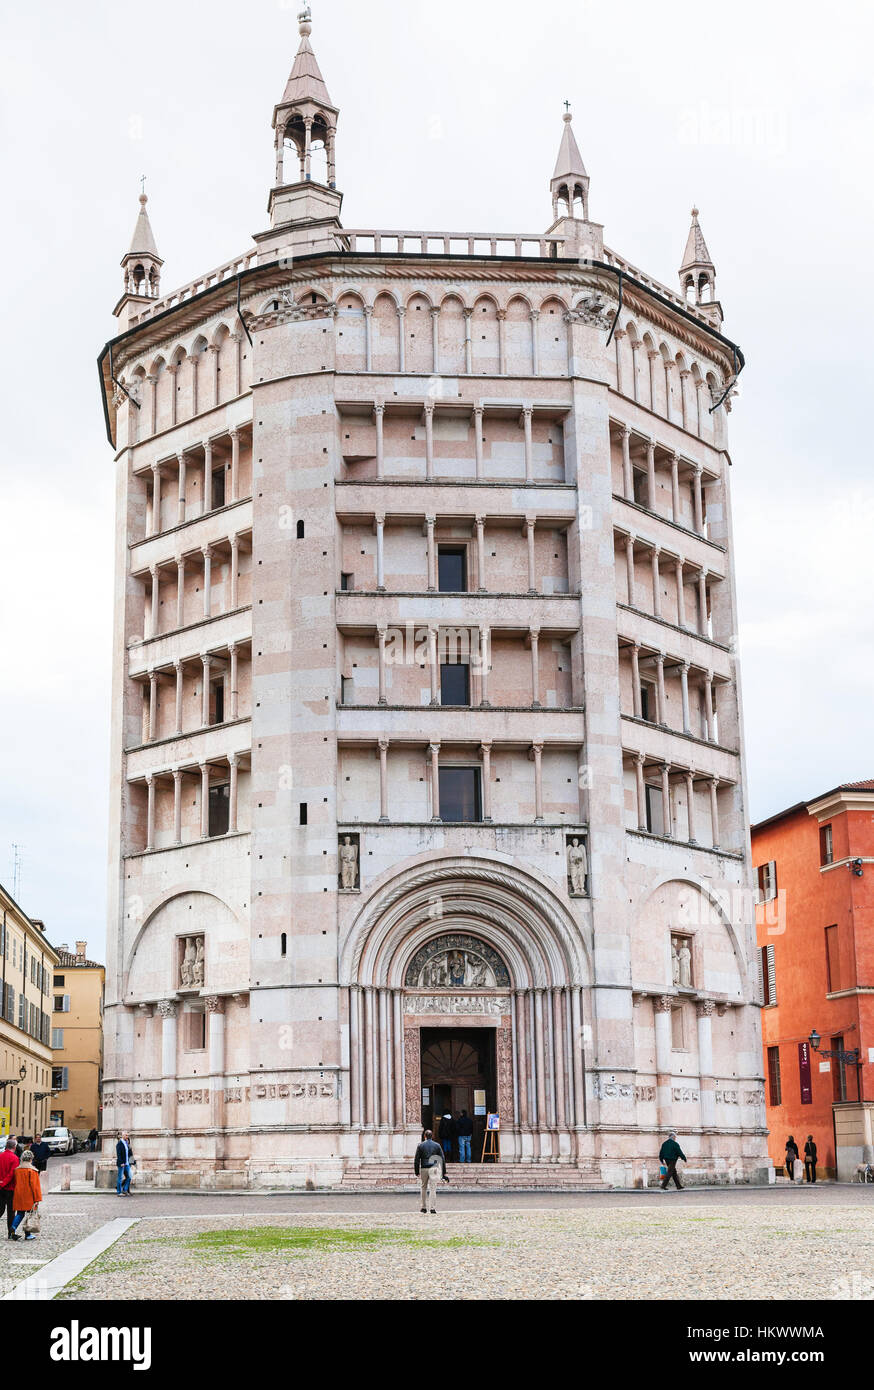 PARMA, Italien - 3. November 2012: Vorderansicht des Baptisterium am Piazza del Duomo in Parma Stadt. Bau des Baptisterium begann 1196 von Antelami. Stockfoto